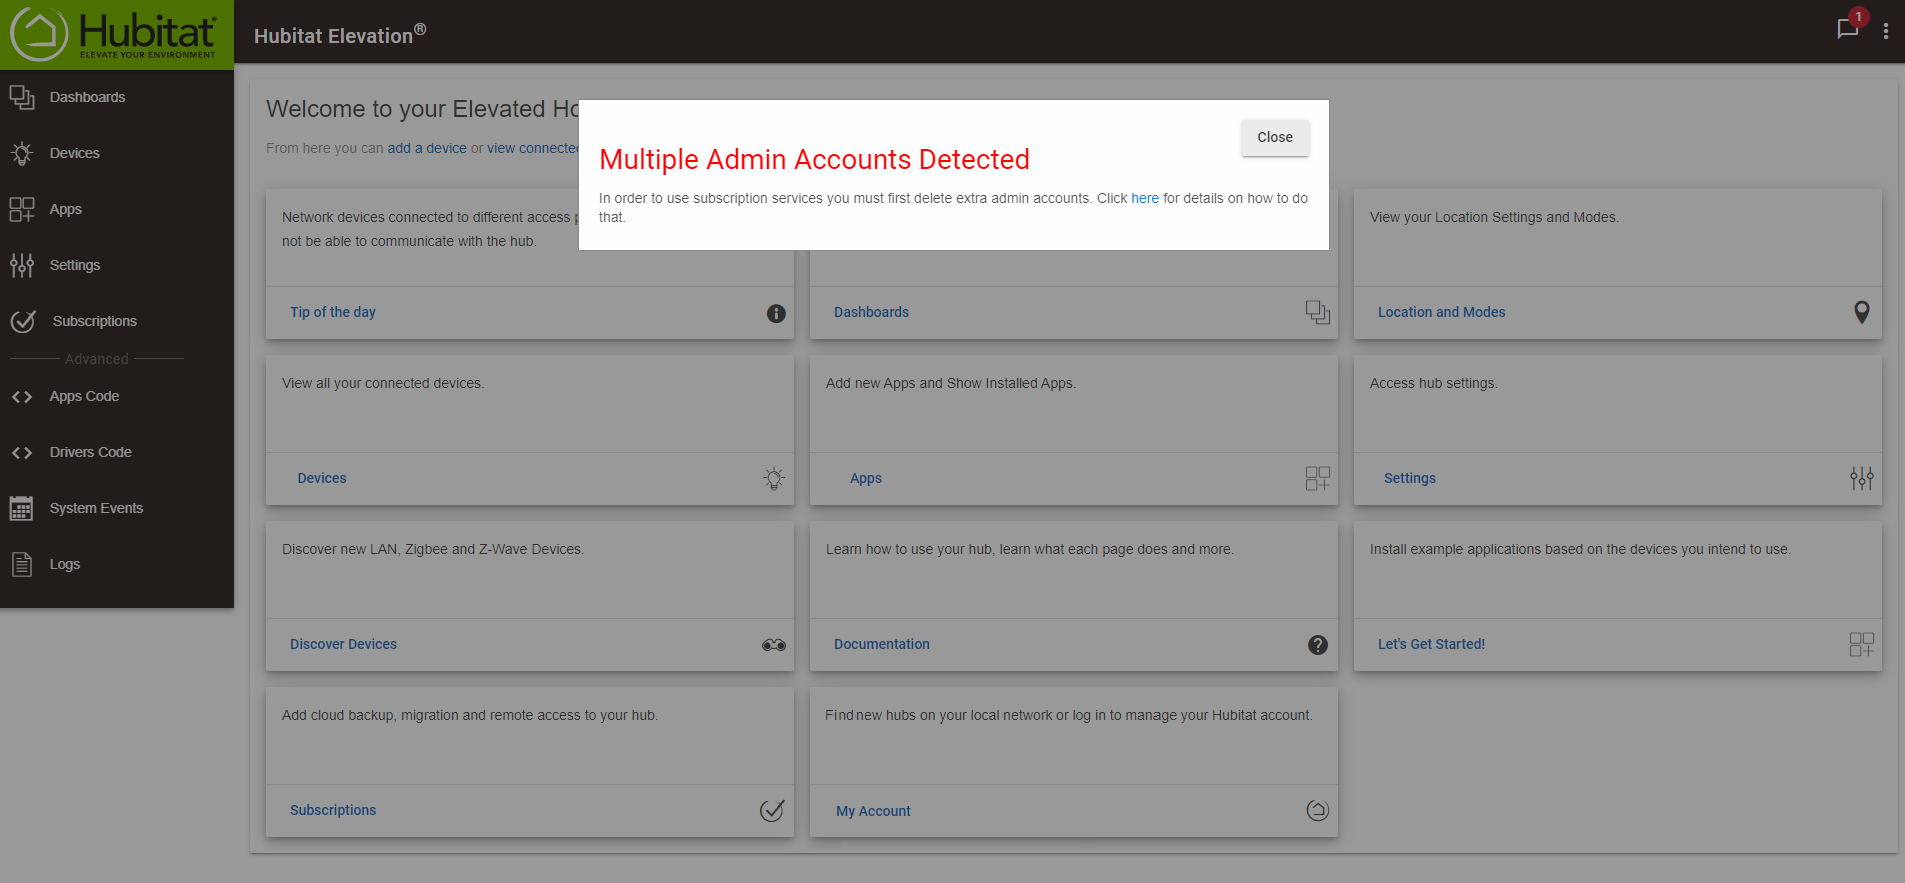 Screenshot: "Multiple Adin Accounts Detected" error